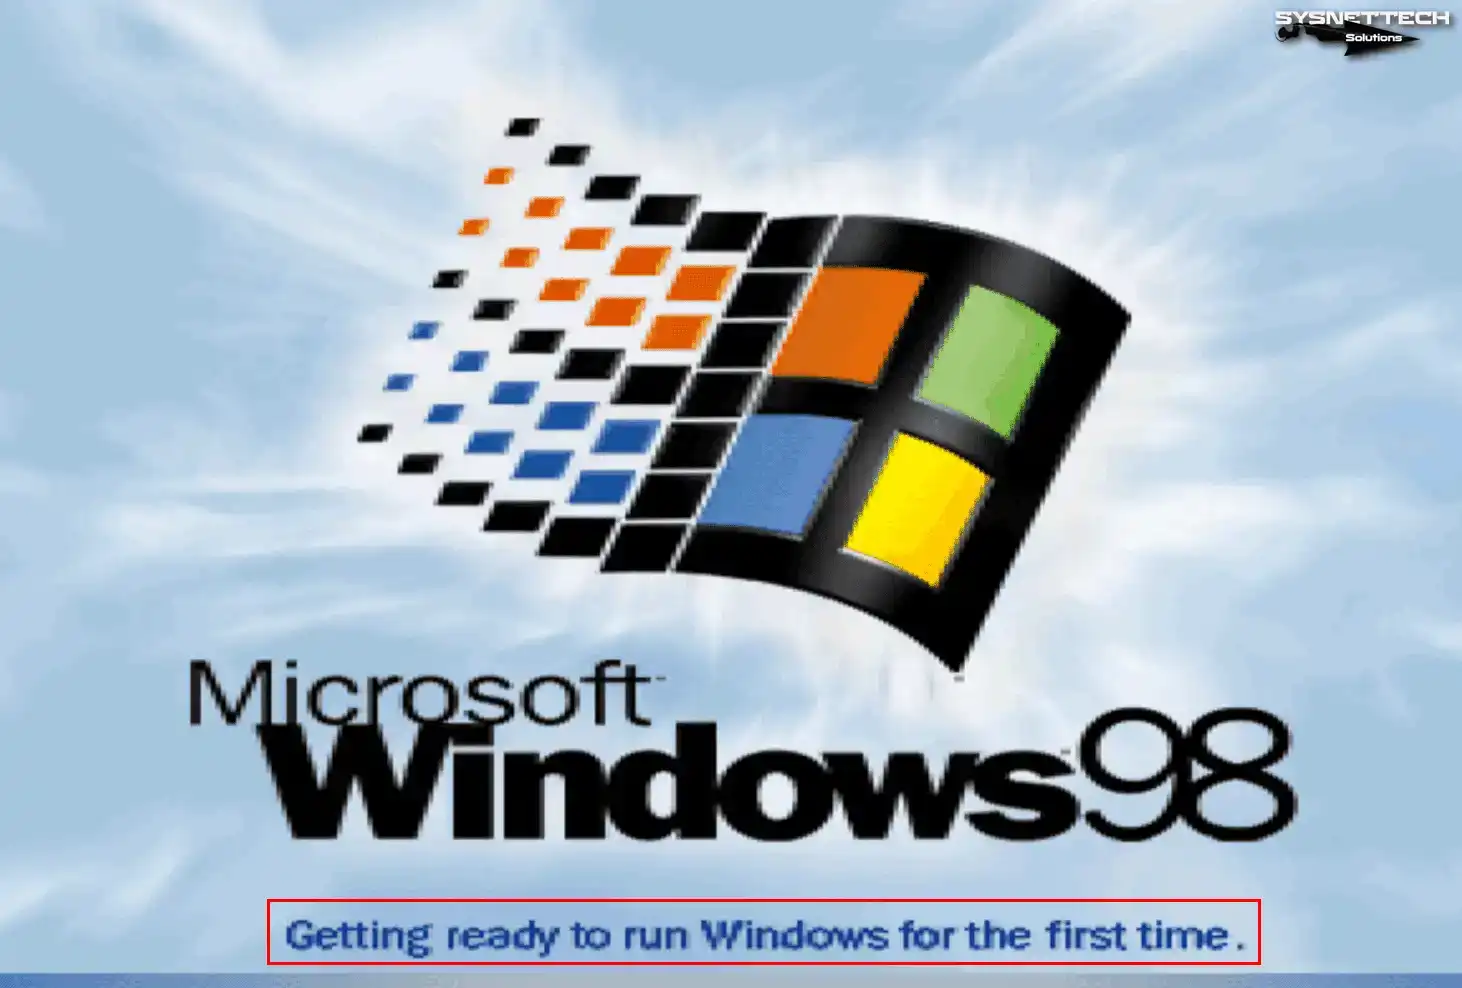 Microsoft Windows 98